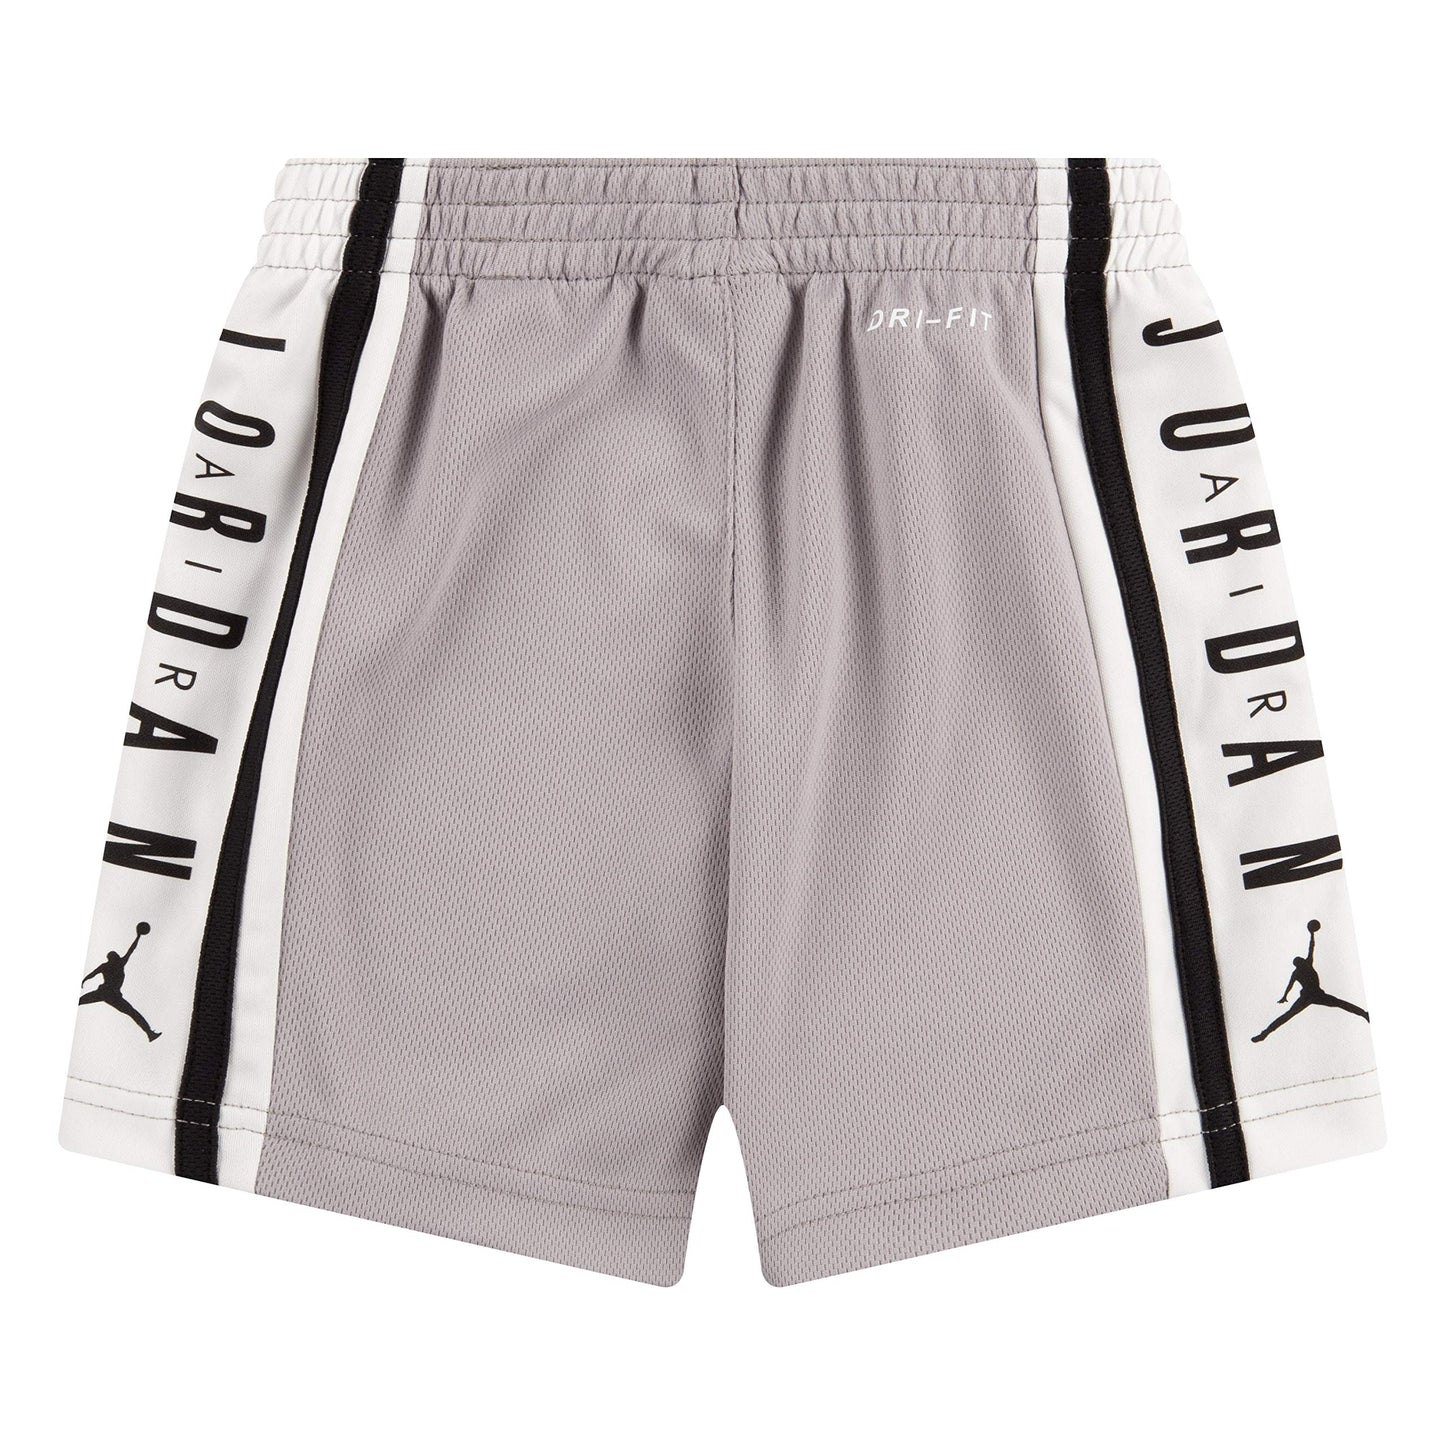 Image 1 of Air Jordan HBR Bball Shorts (Toddler)